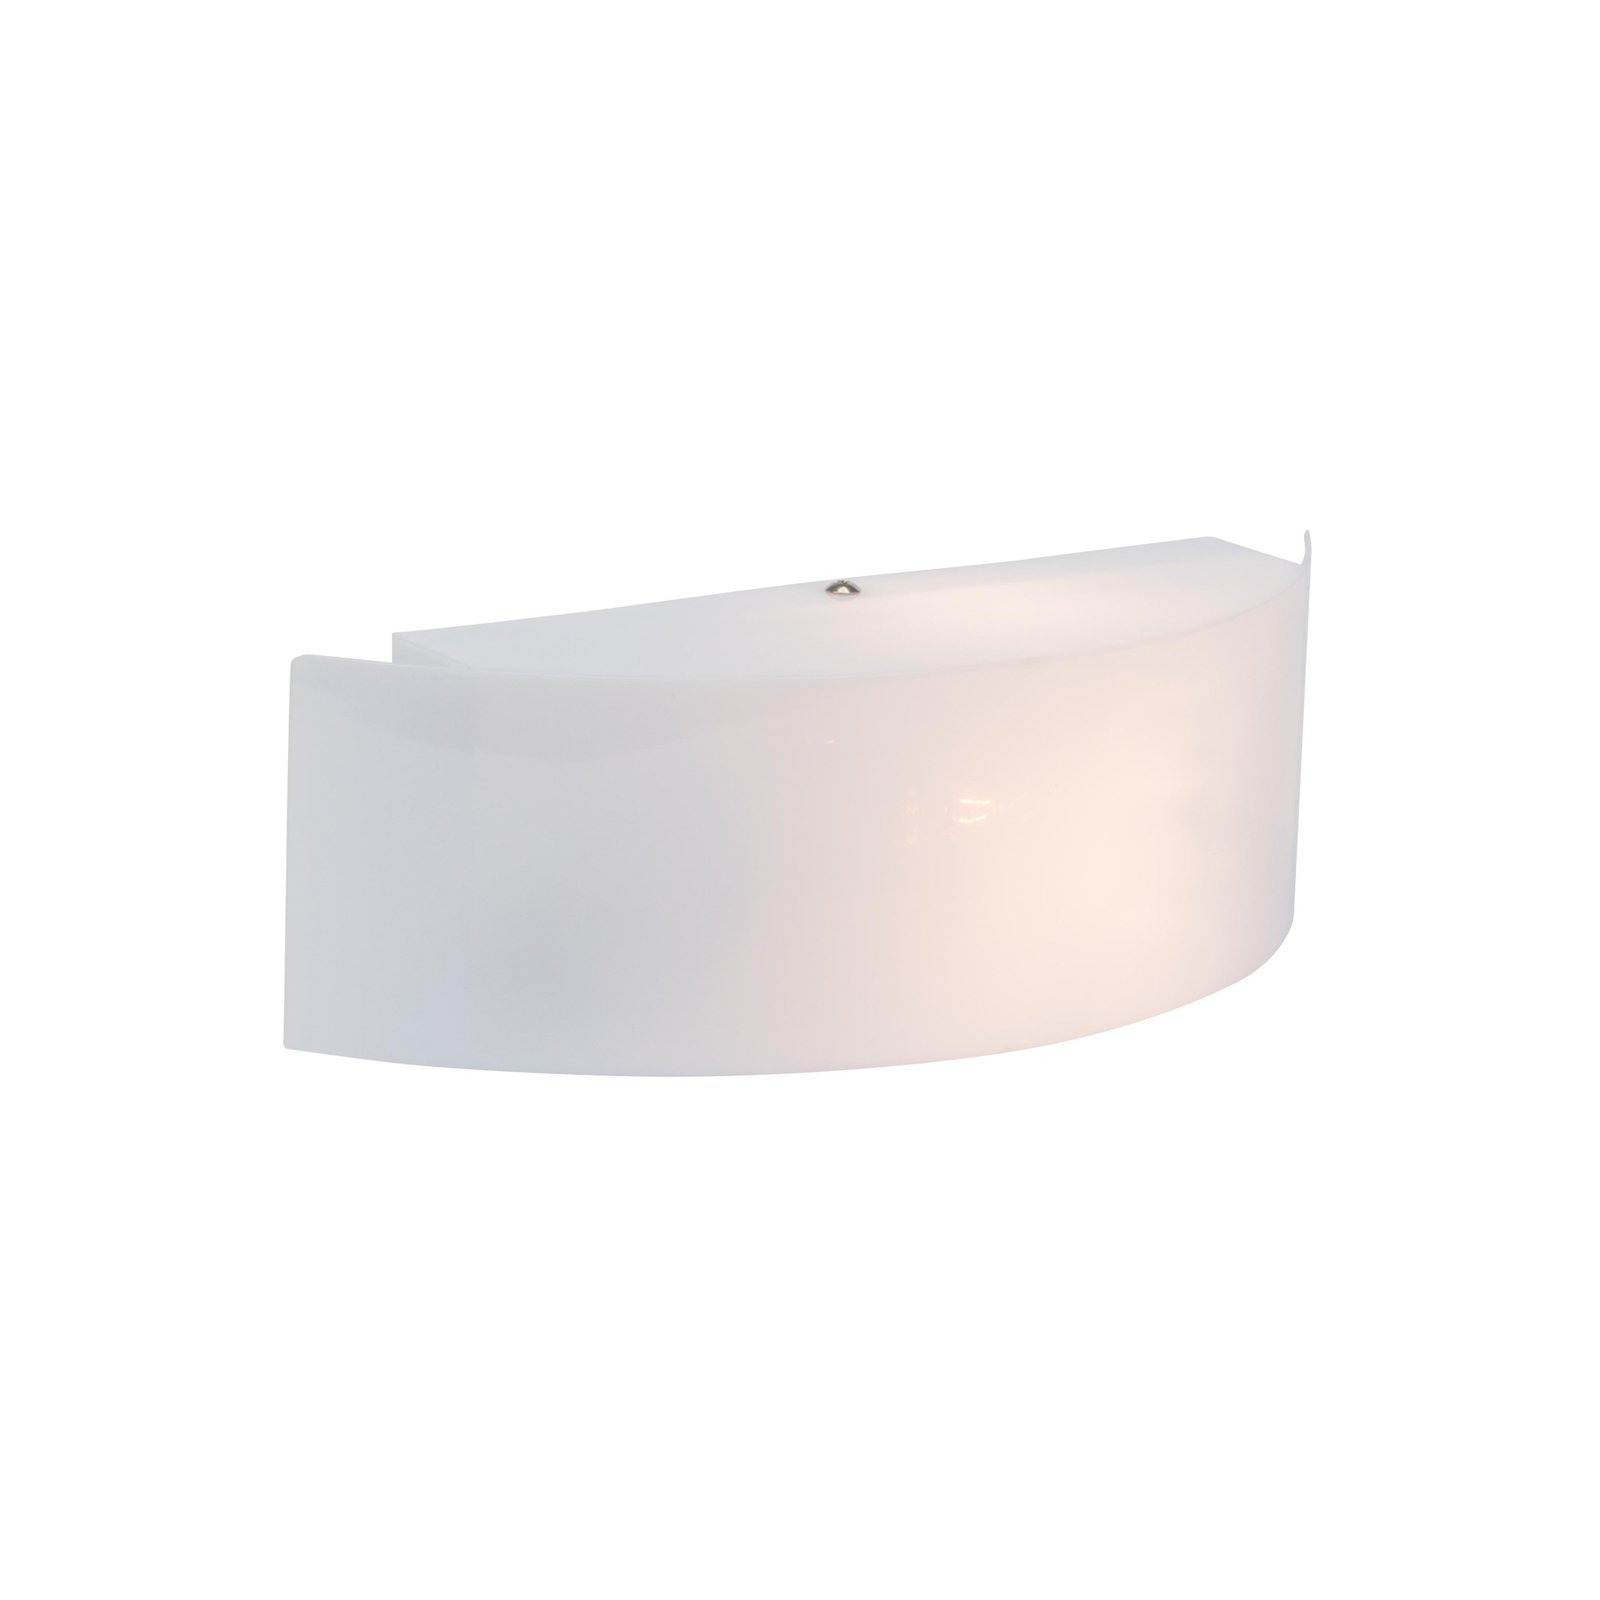 Zunanja stenska svetilka Interface, bela, širina 31 cm, plastika